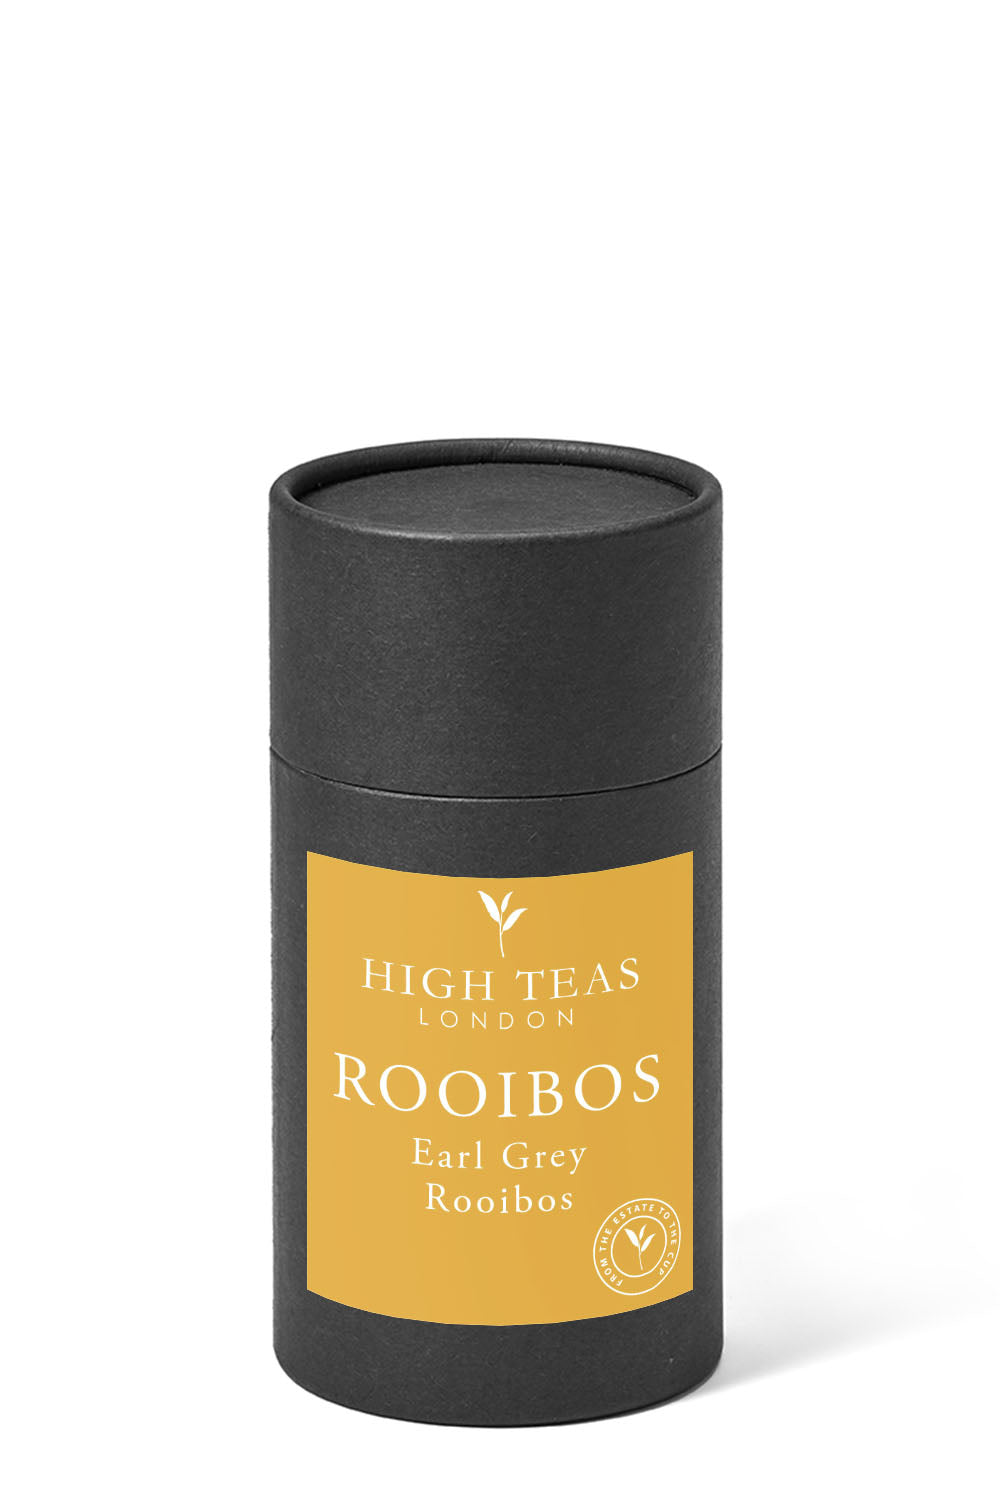 Earl Grey Rooibos-60g Gift-Loose Leaf Tea-High Teas